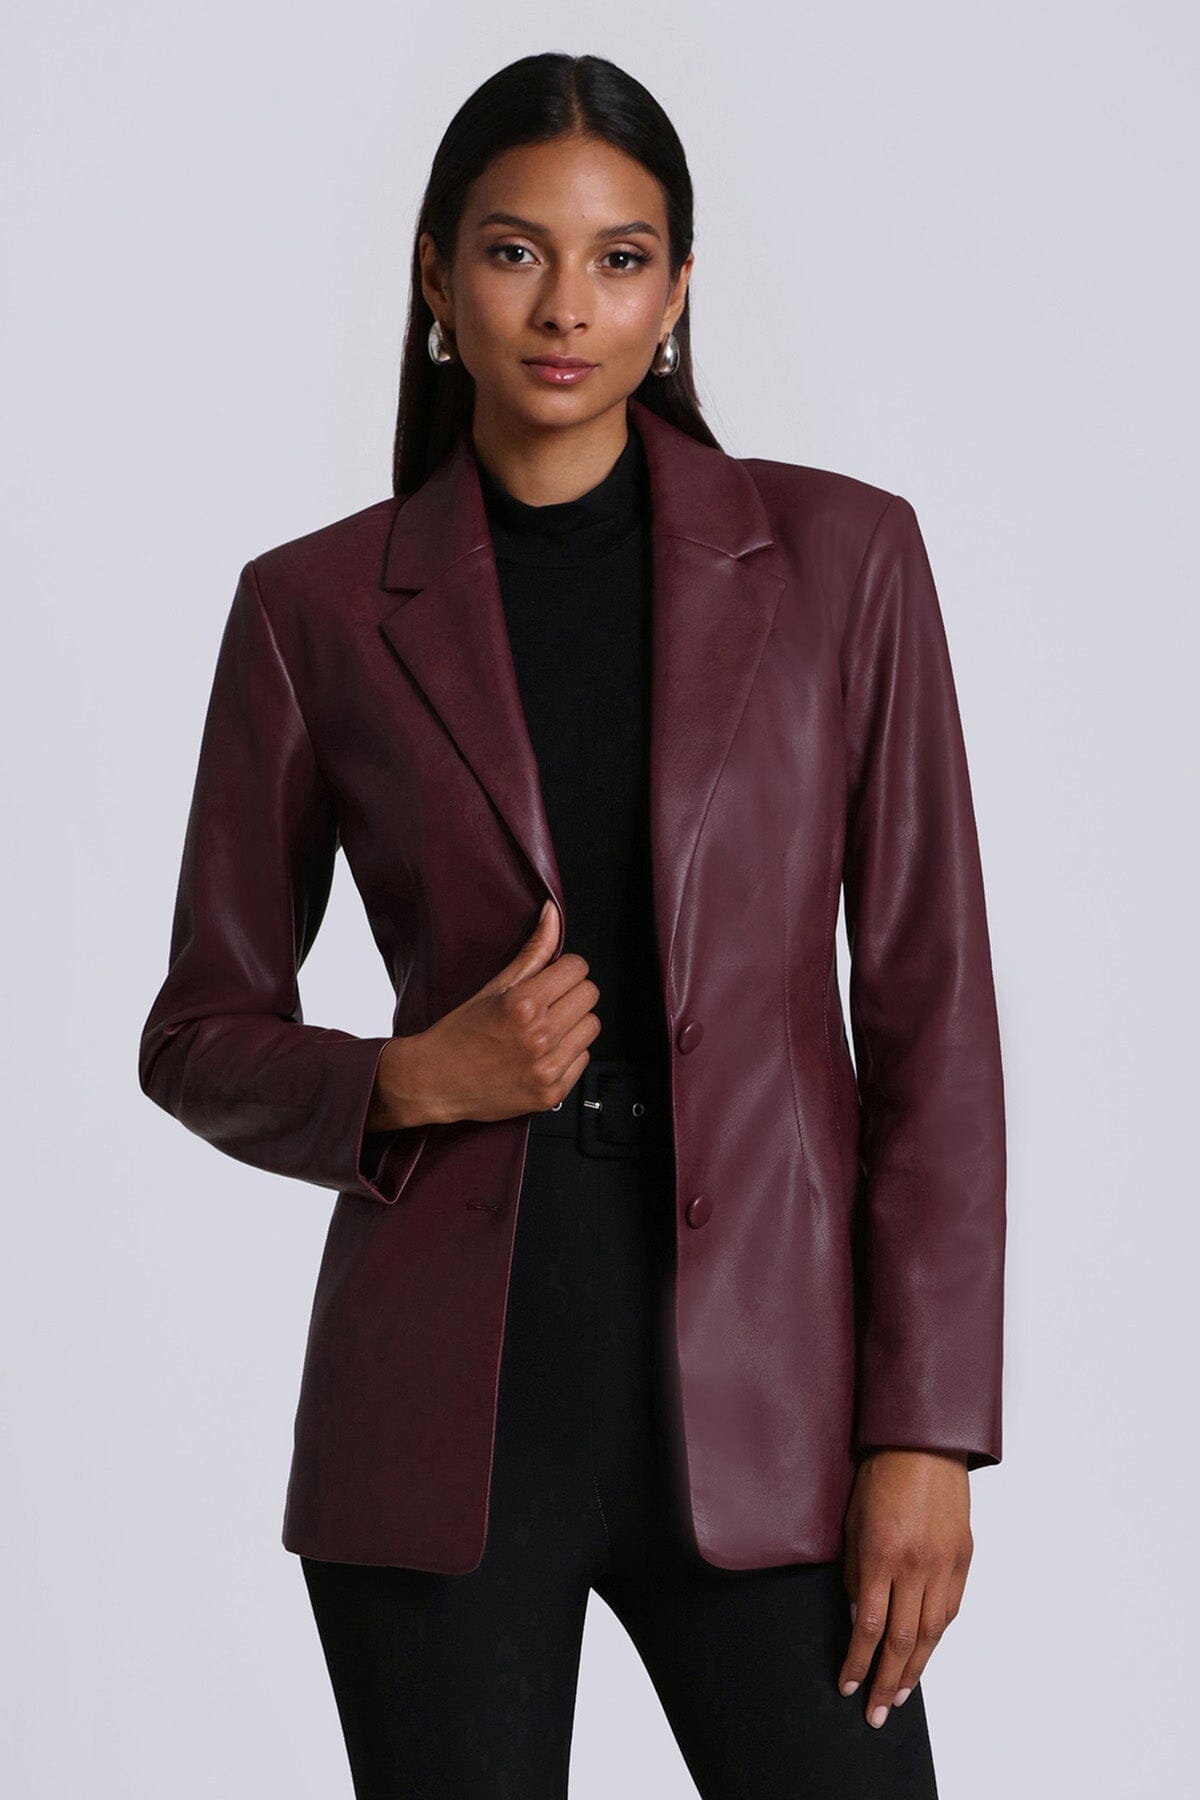 faux ever leather sculpted blazer jacket coat oxblood red - women's figure flattering date night coats jackets blazers for women